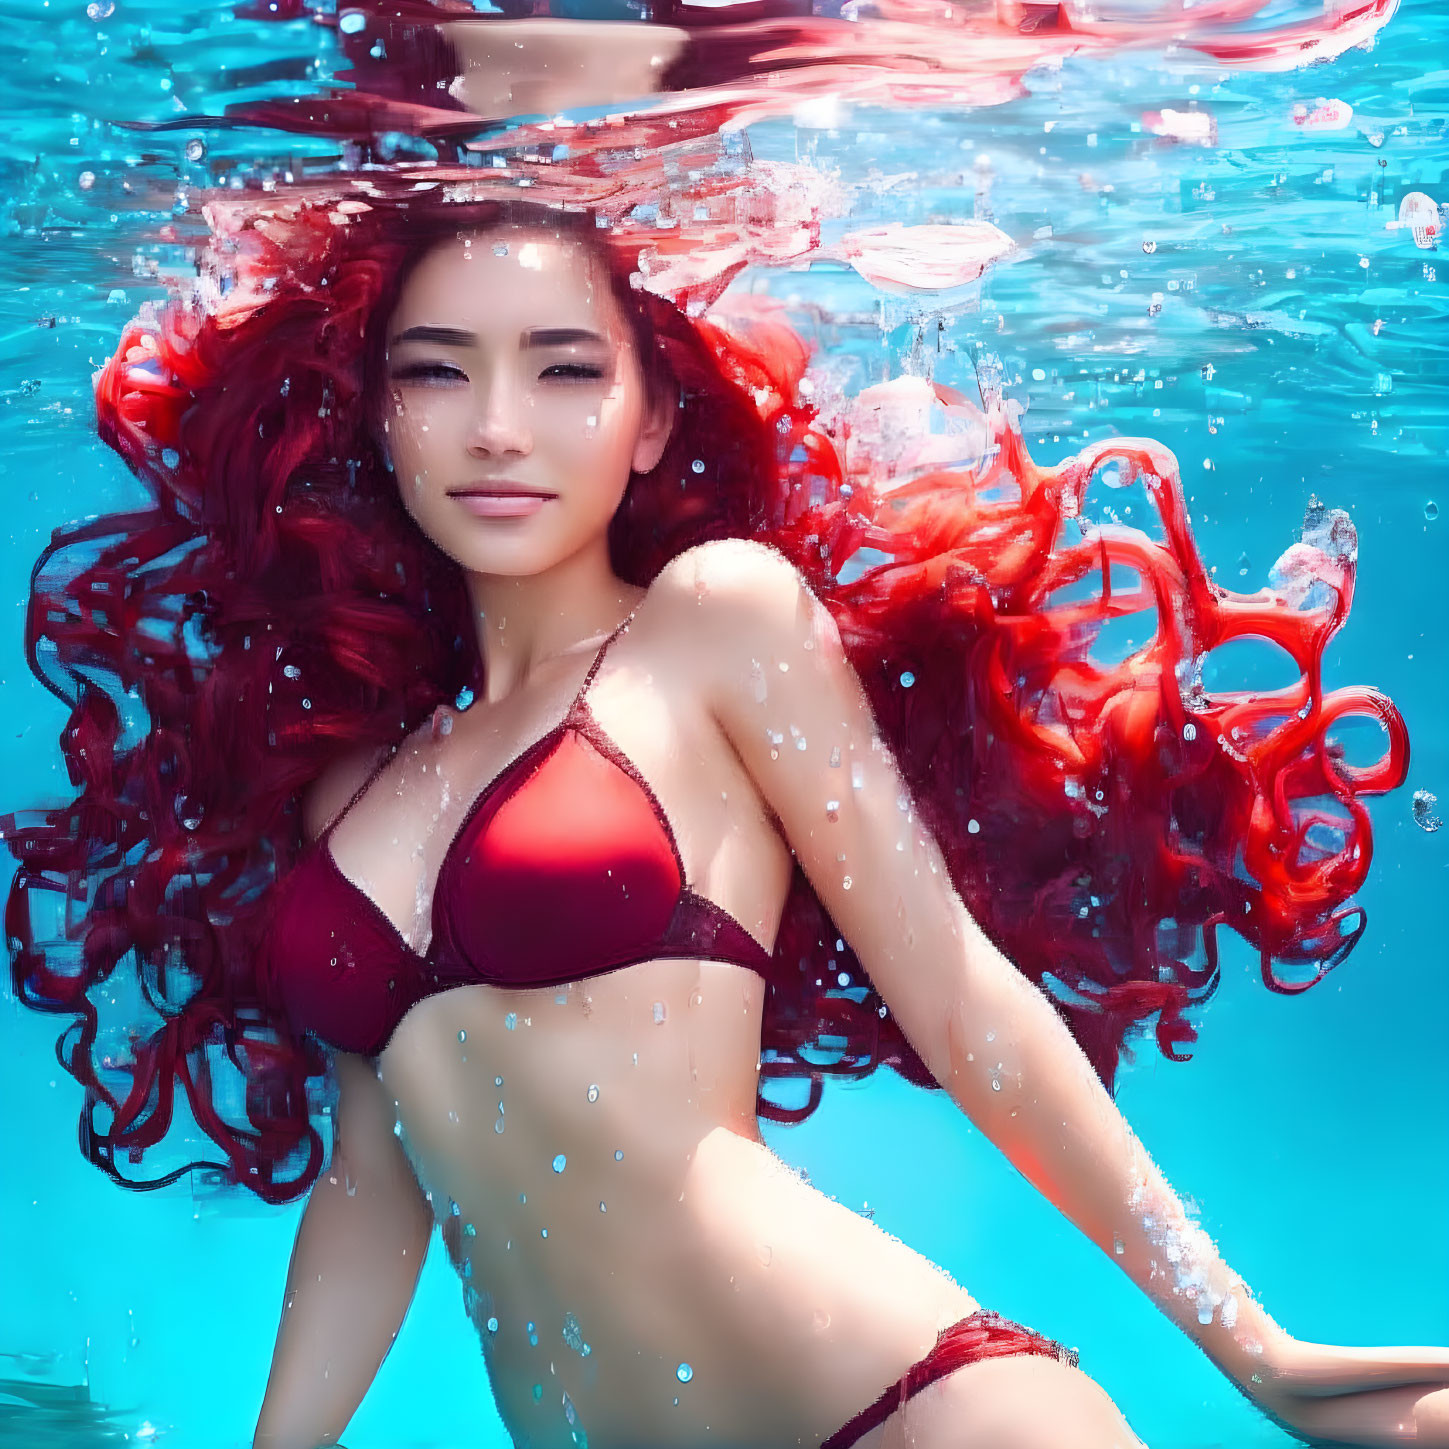 mermaid with beautiful red hair